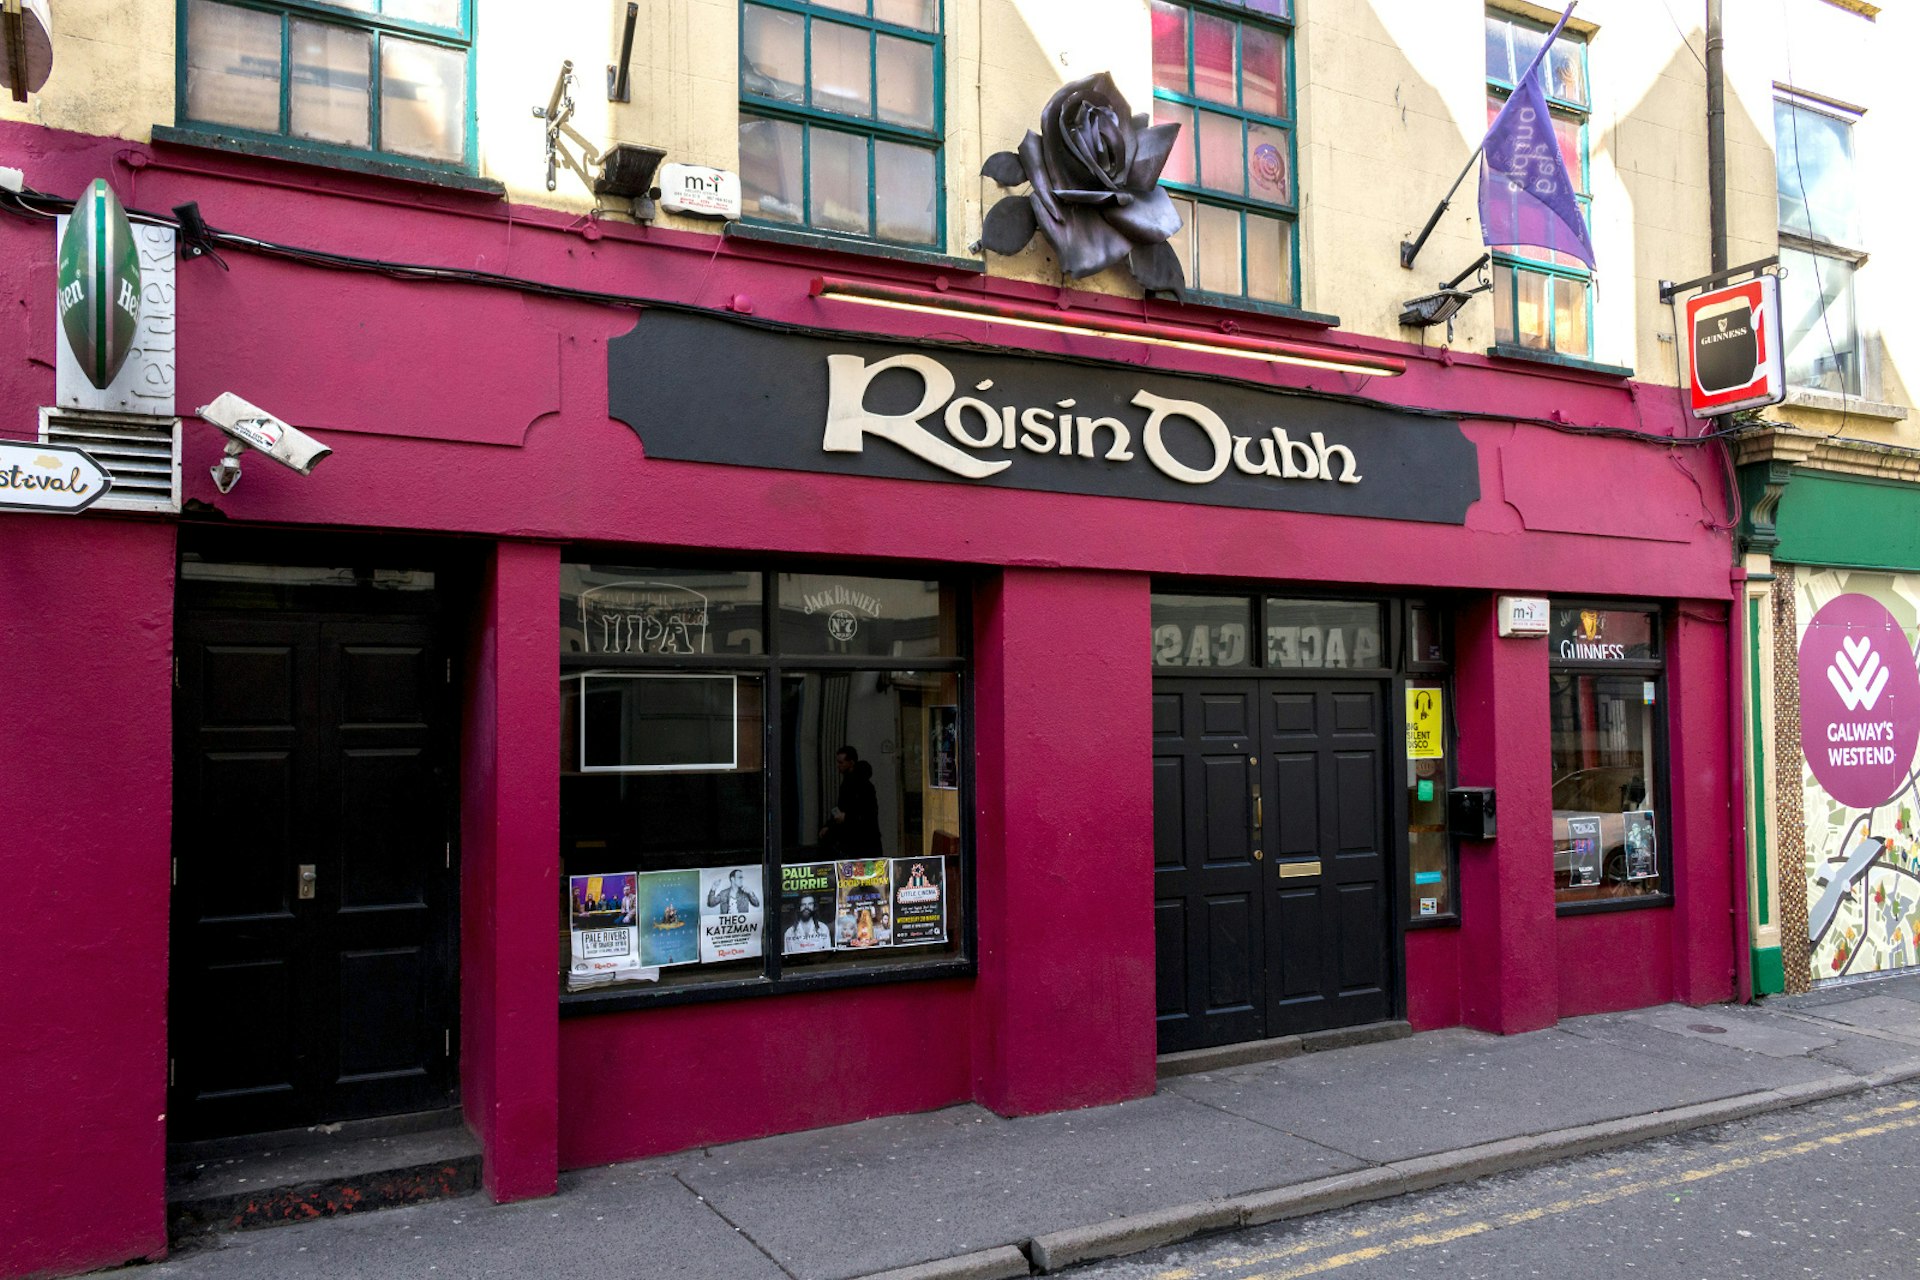 Róisín Dubh in Galway